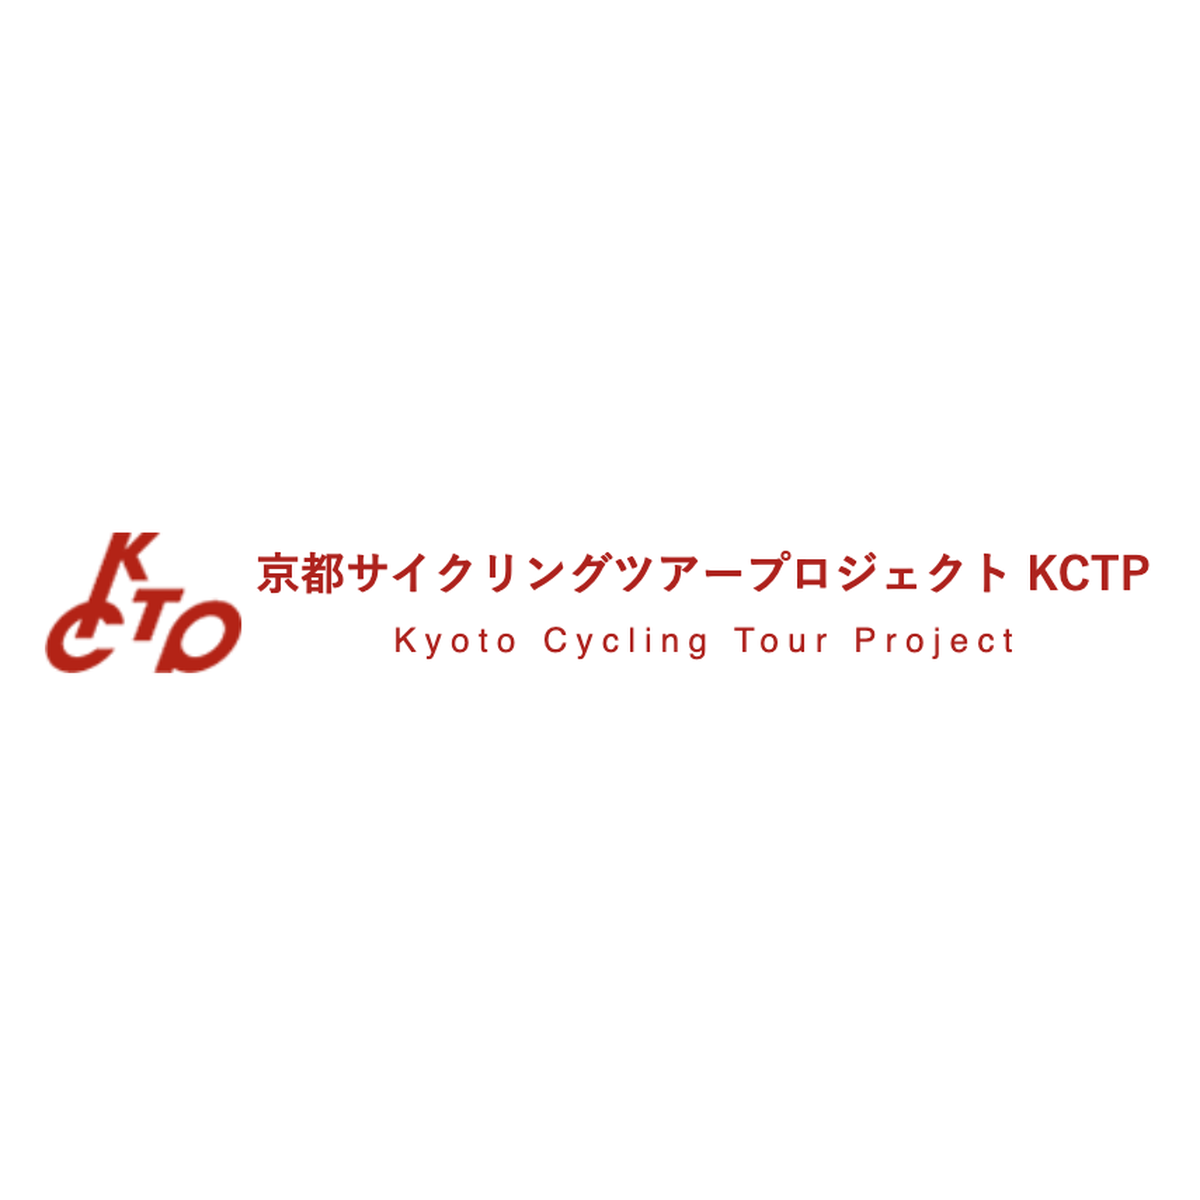 Kctp 京都サイクリングツアープロジェクト